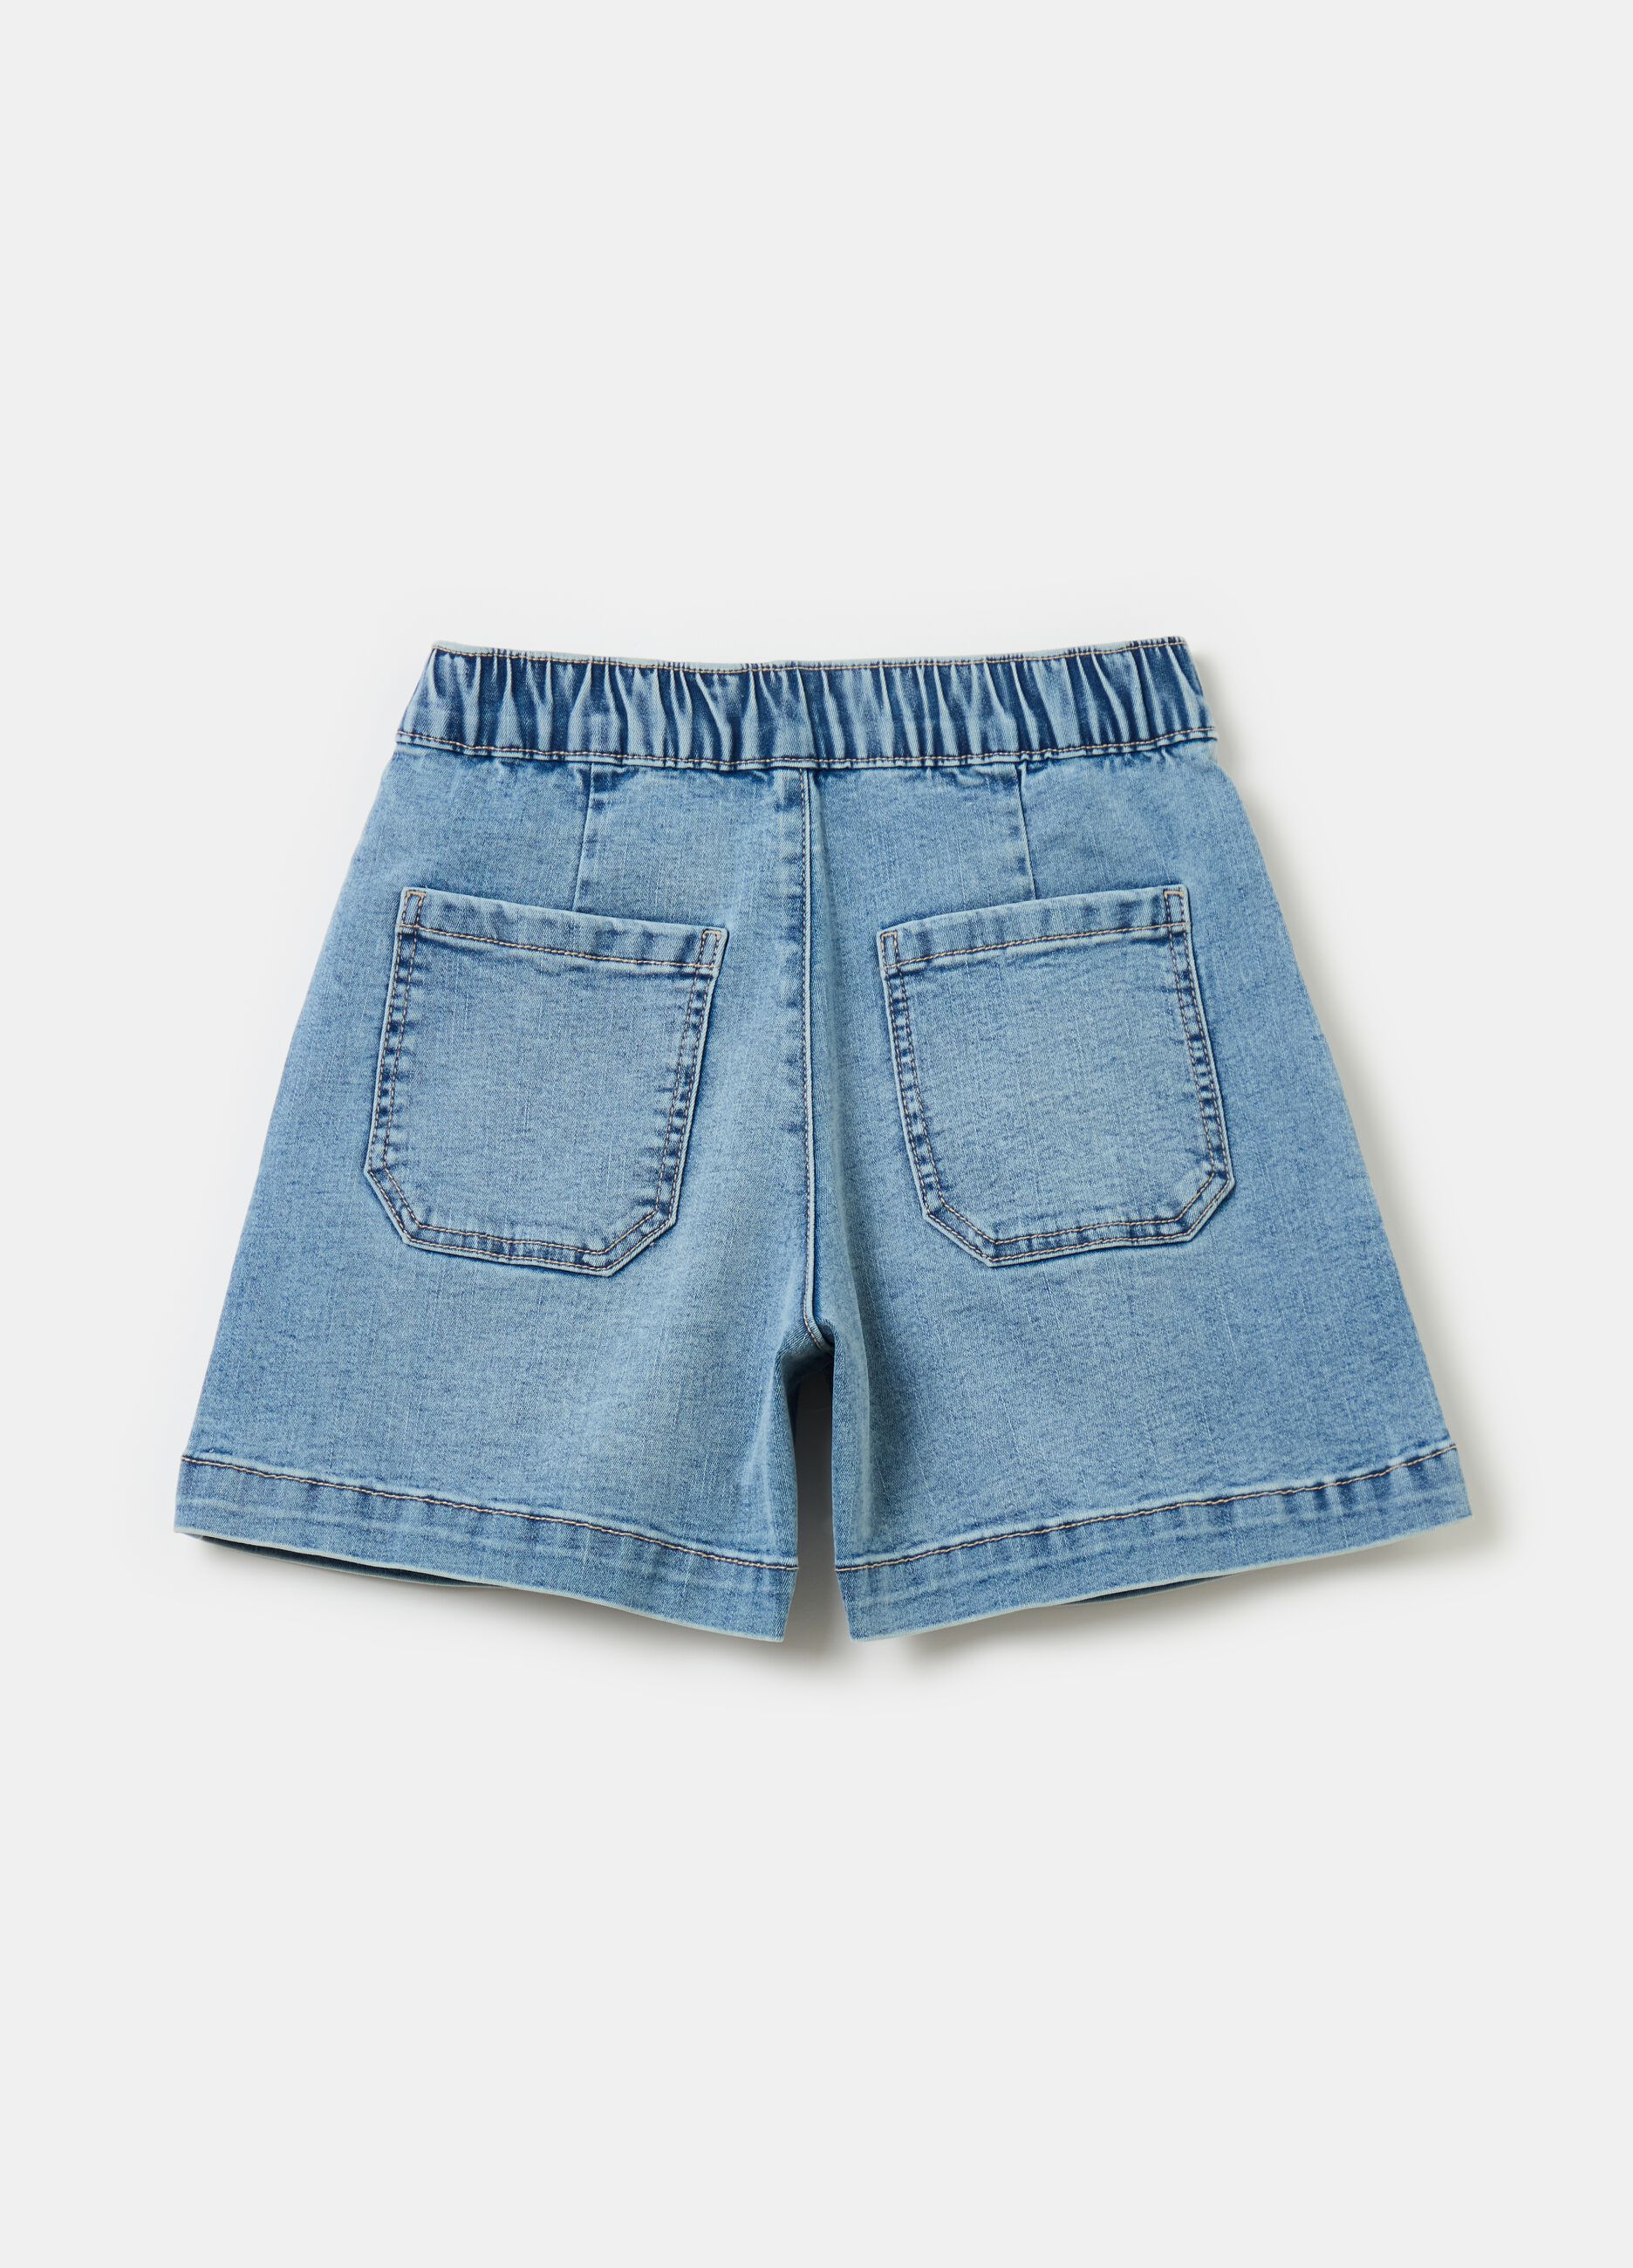 Denim shorts with pockets